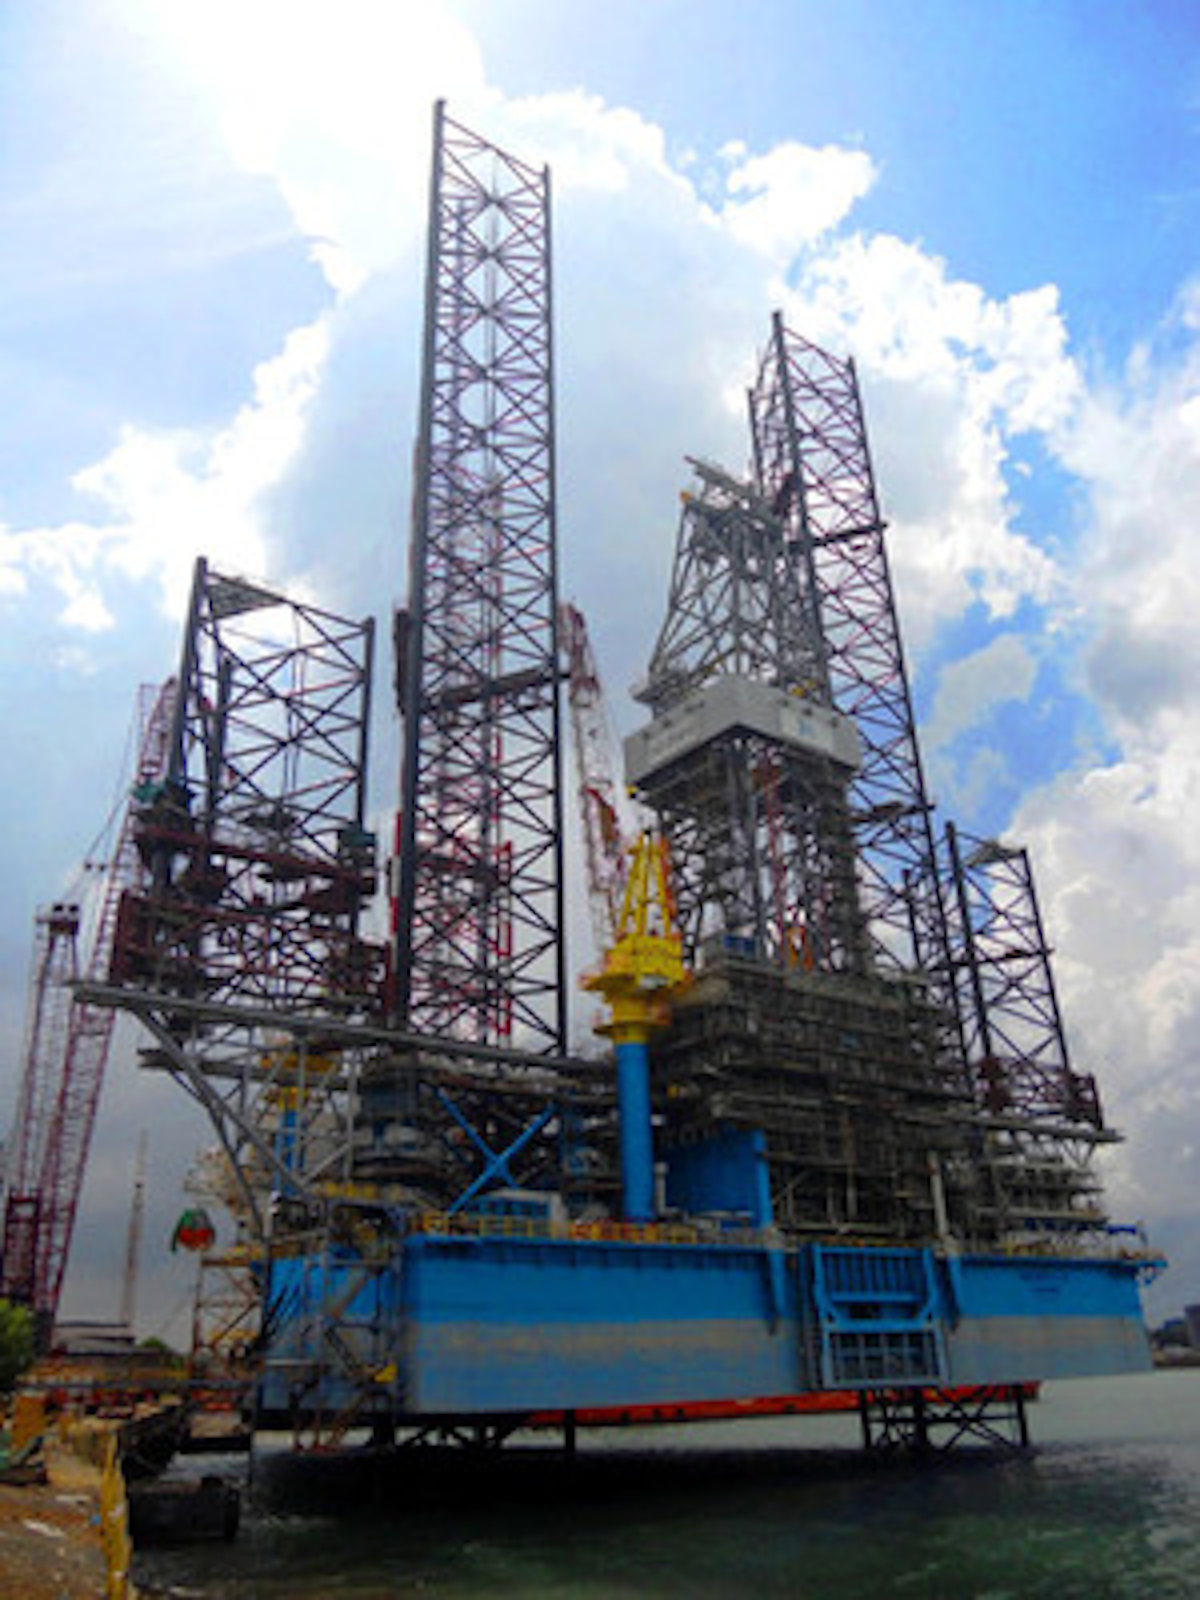 hakuryu guyana exploration offshore shipyard ppl singapore completion jackup nears construction cgx energy block newswire ca berbice announces corentyne sander